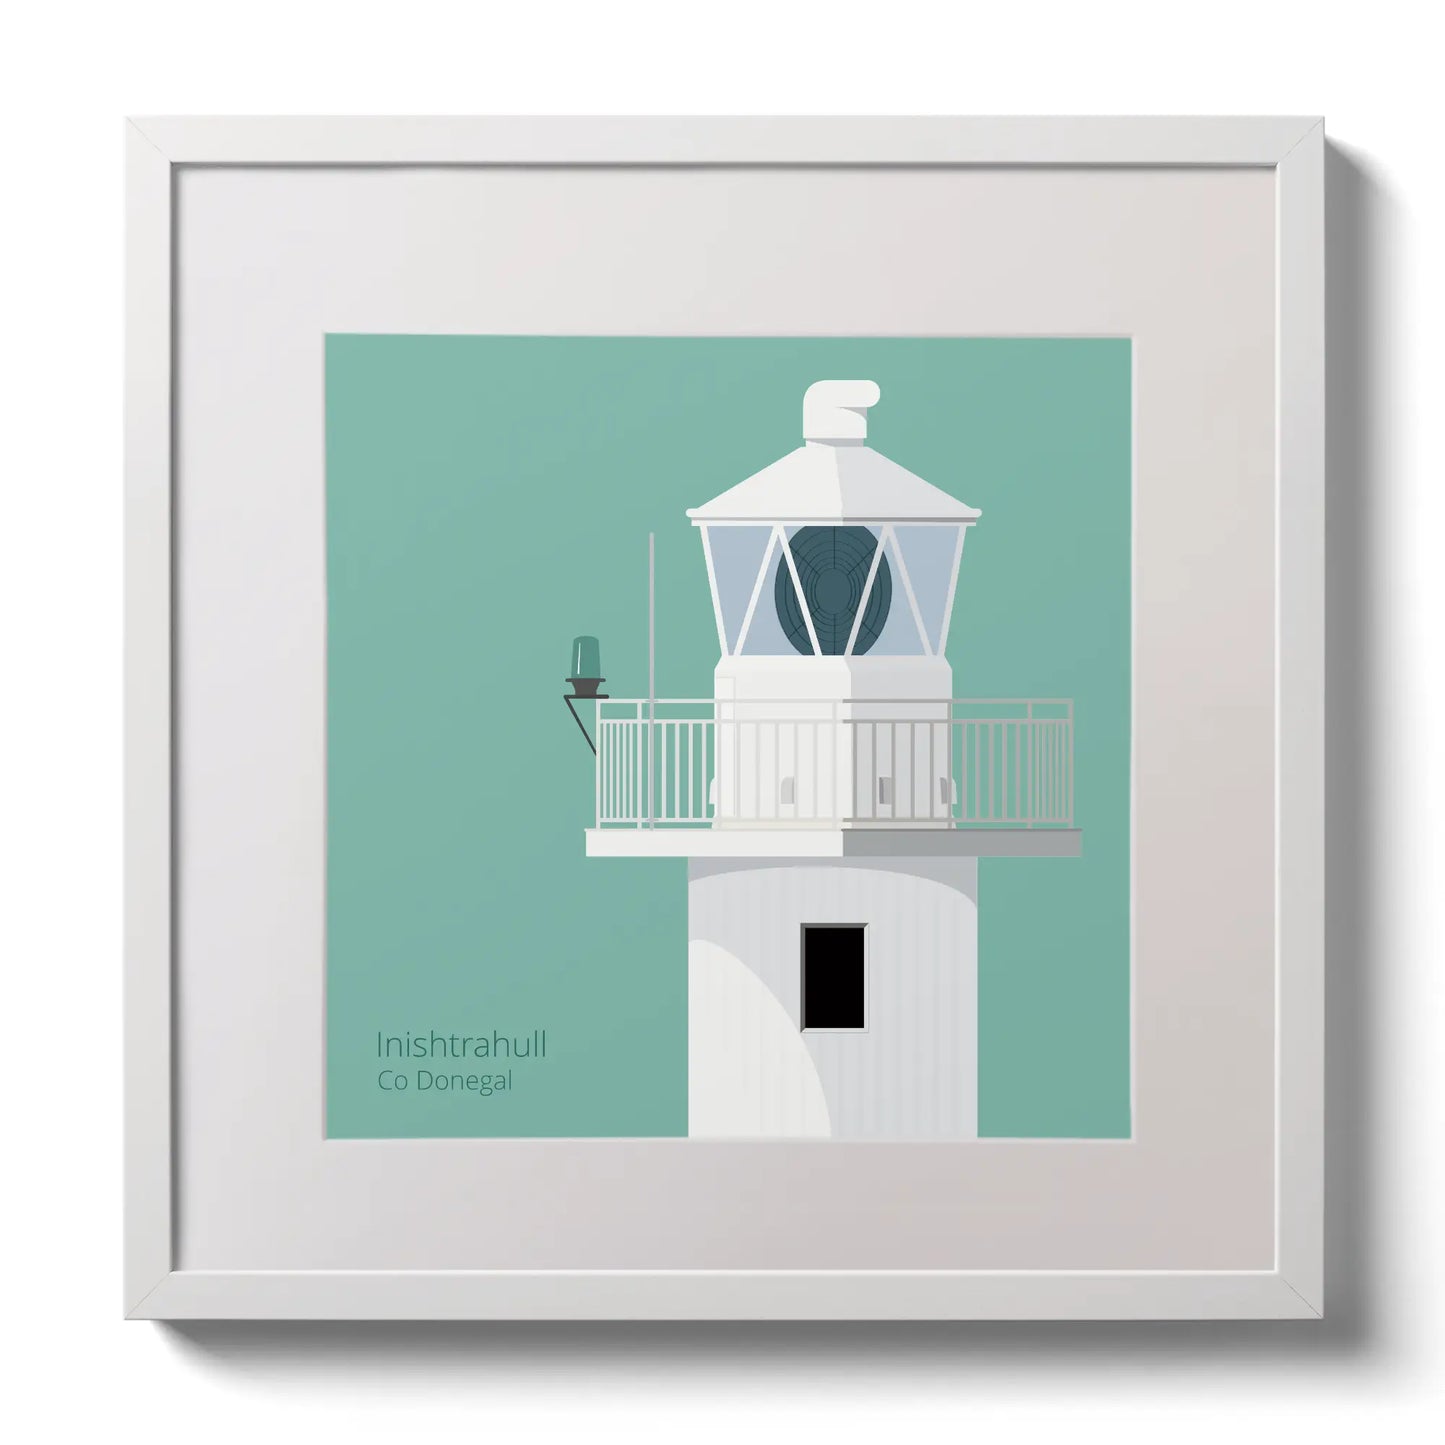 Illustration of Inishtrahull lighthouse on an ocean green background,  in a white square frame measuring 30x30cm.